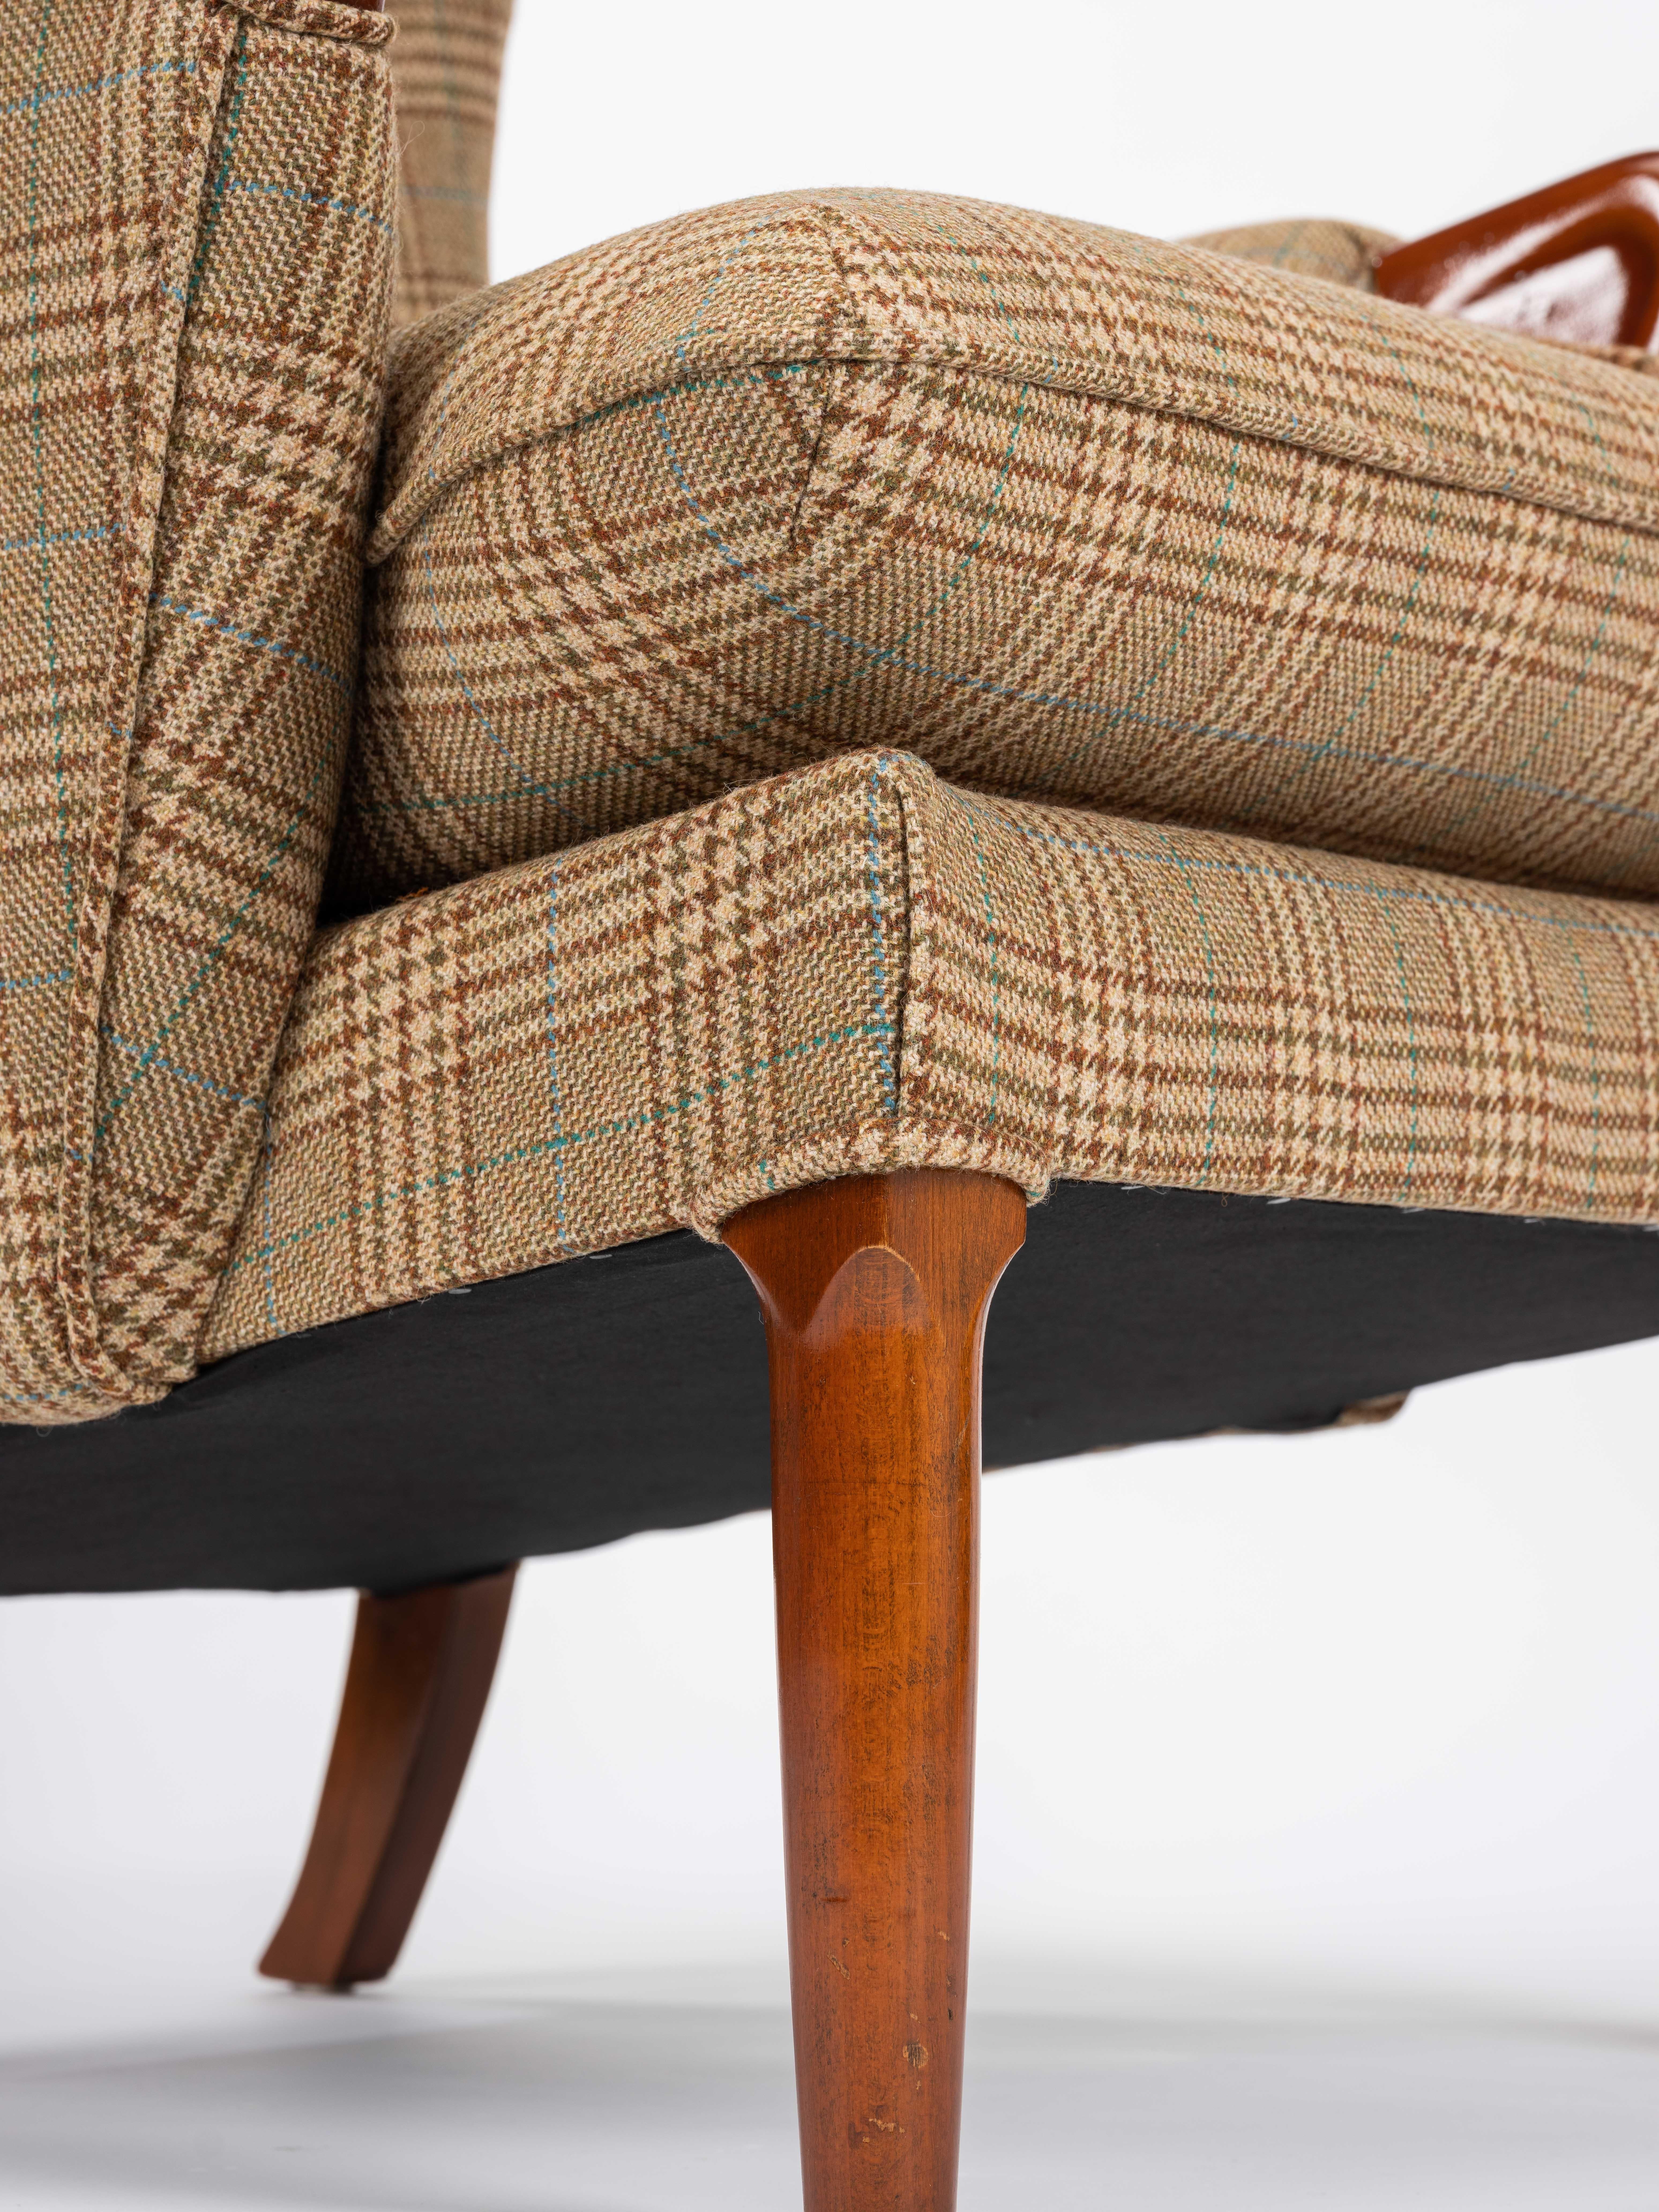 Midcentury Vintage Wingback Chairs Reupholstered in Yorkshire Tweed, circa 1960s (Mitte des 20. Jahrhunderts)